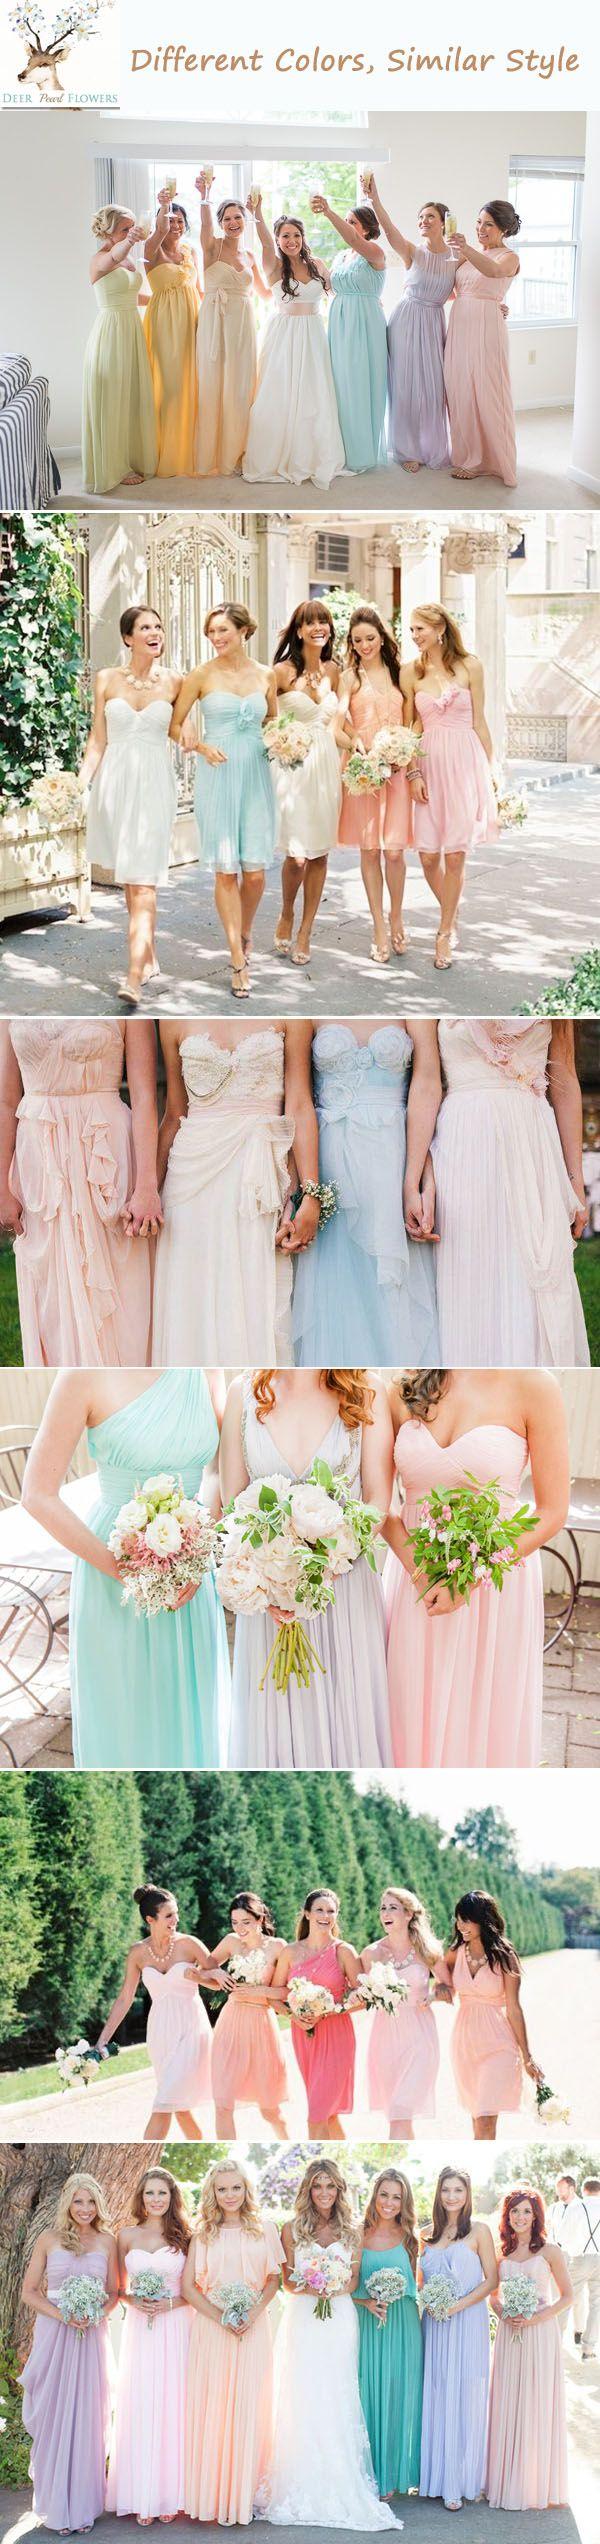 Wedding - Top 6 Ways To Do Mismatched Bridesmaid Dresses